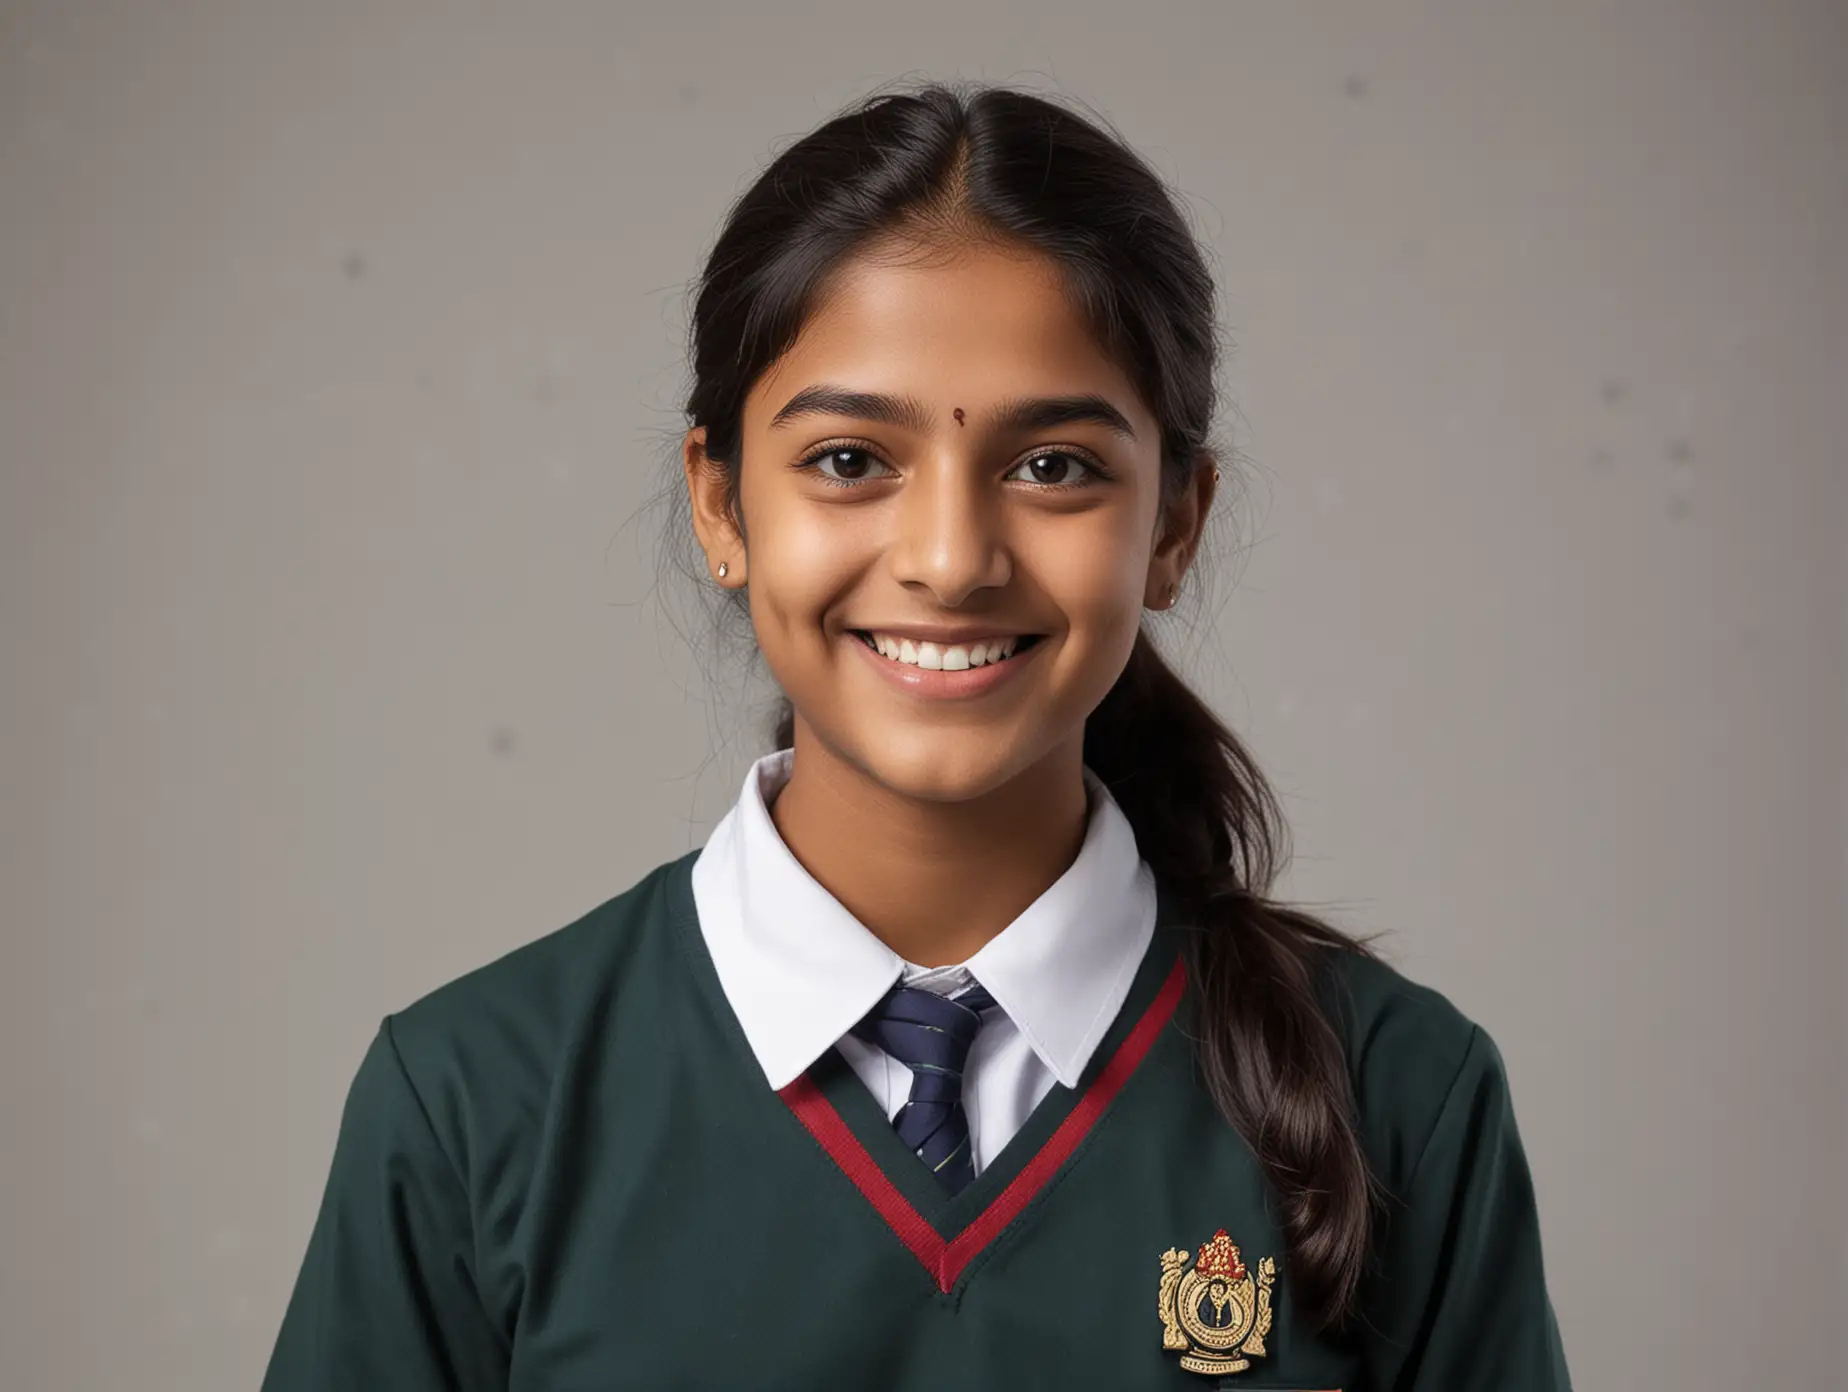 Indian-High-School-Student-Smiling-in-Uniform-Portrait